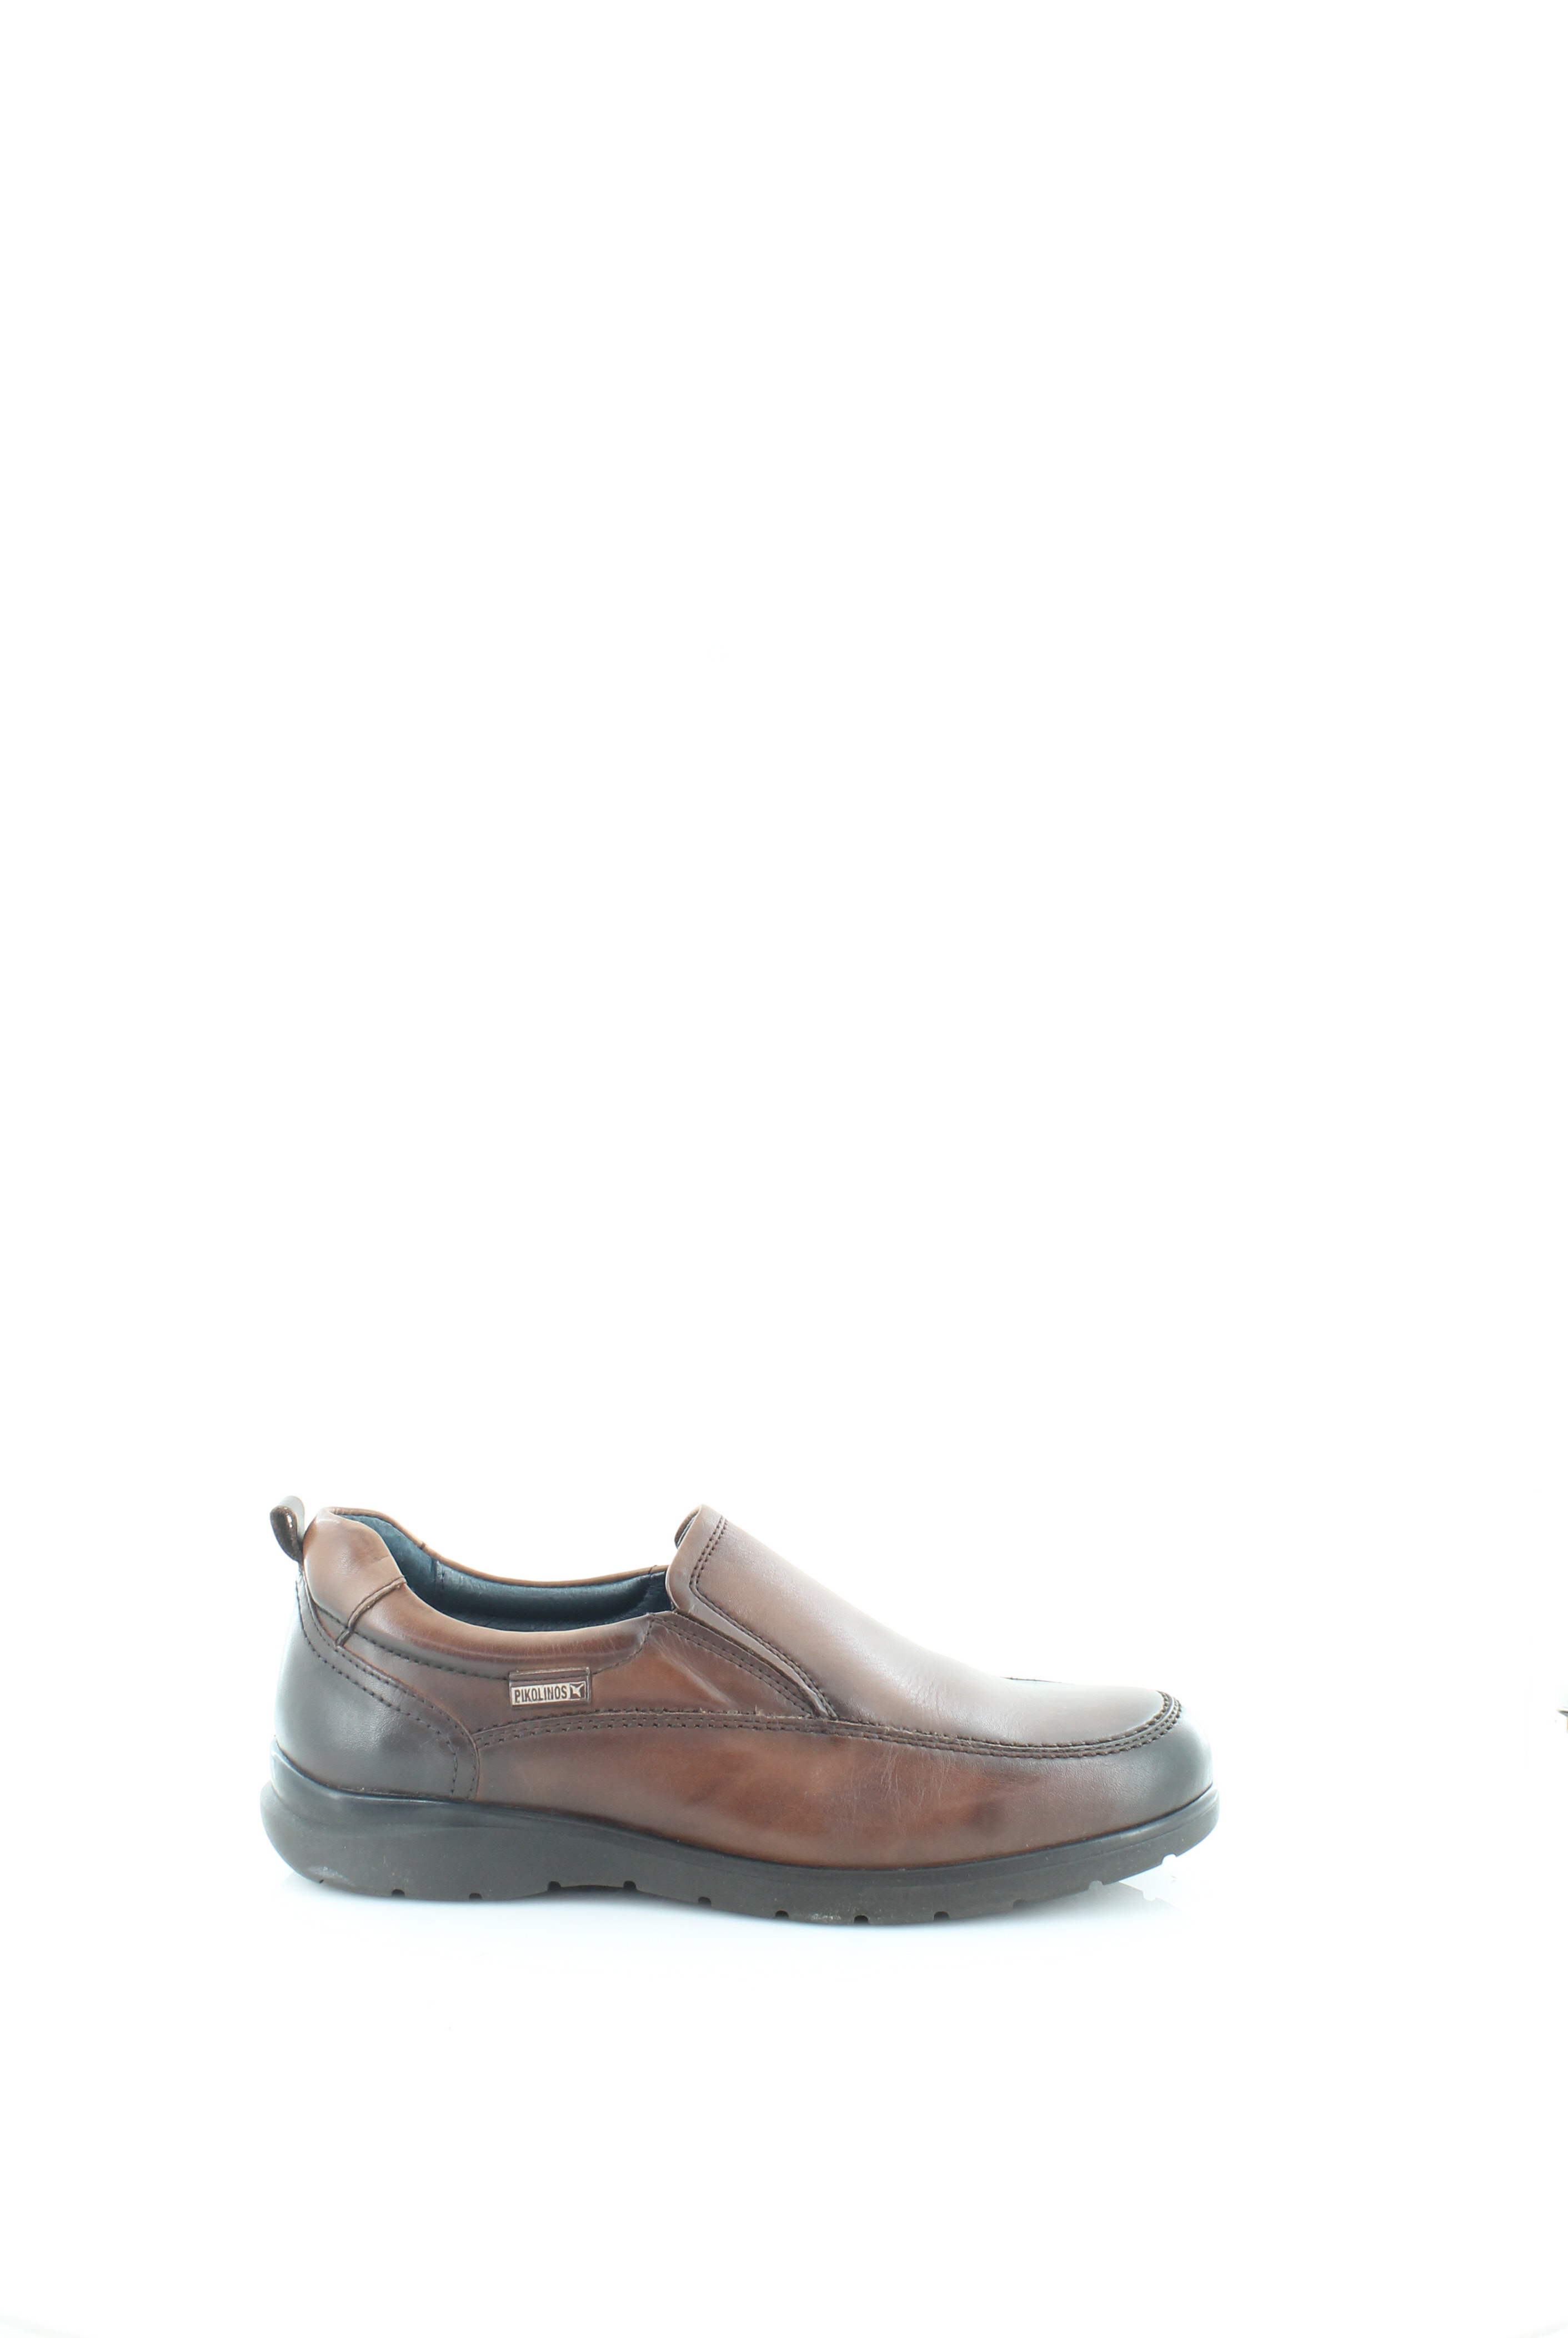 Pikolinos New San Lorenzo M1C-3036 Brown Mens Shoes Size 7 M Casual ...